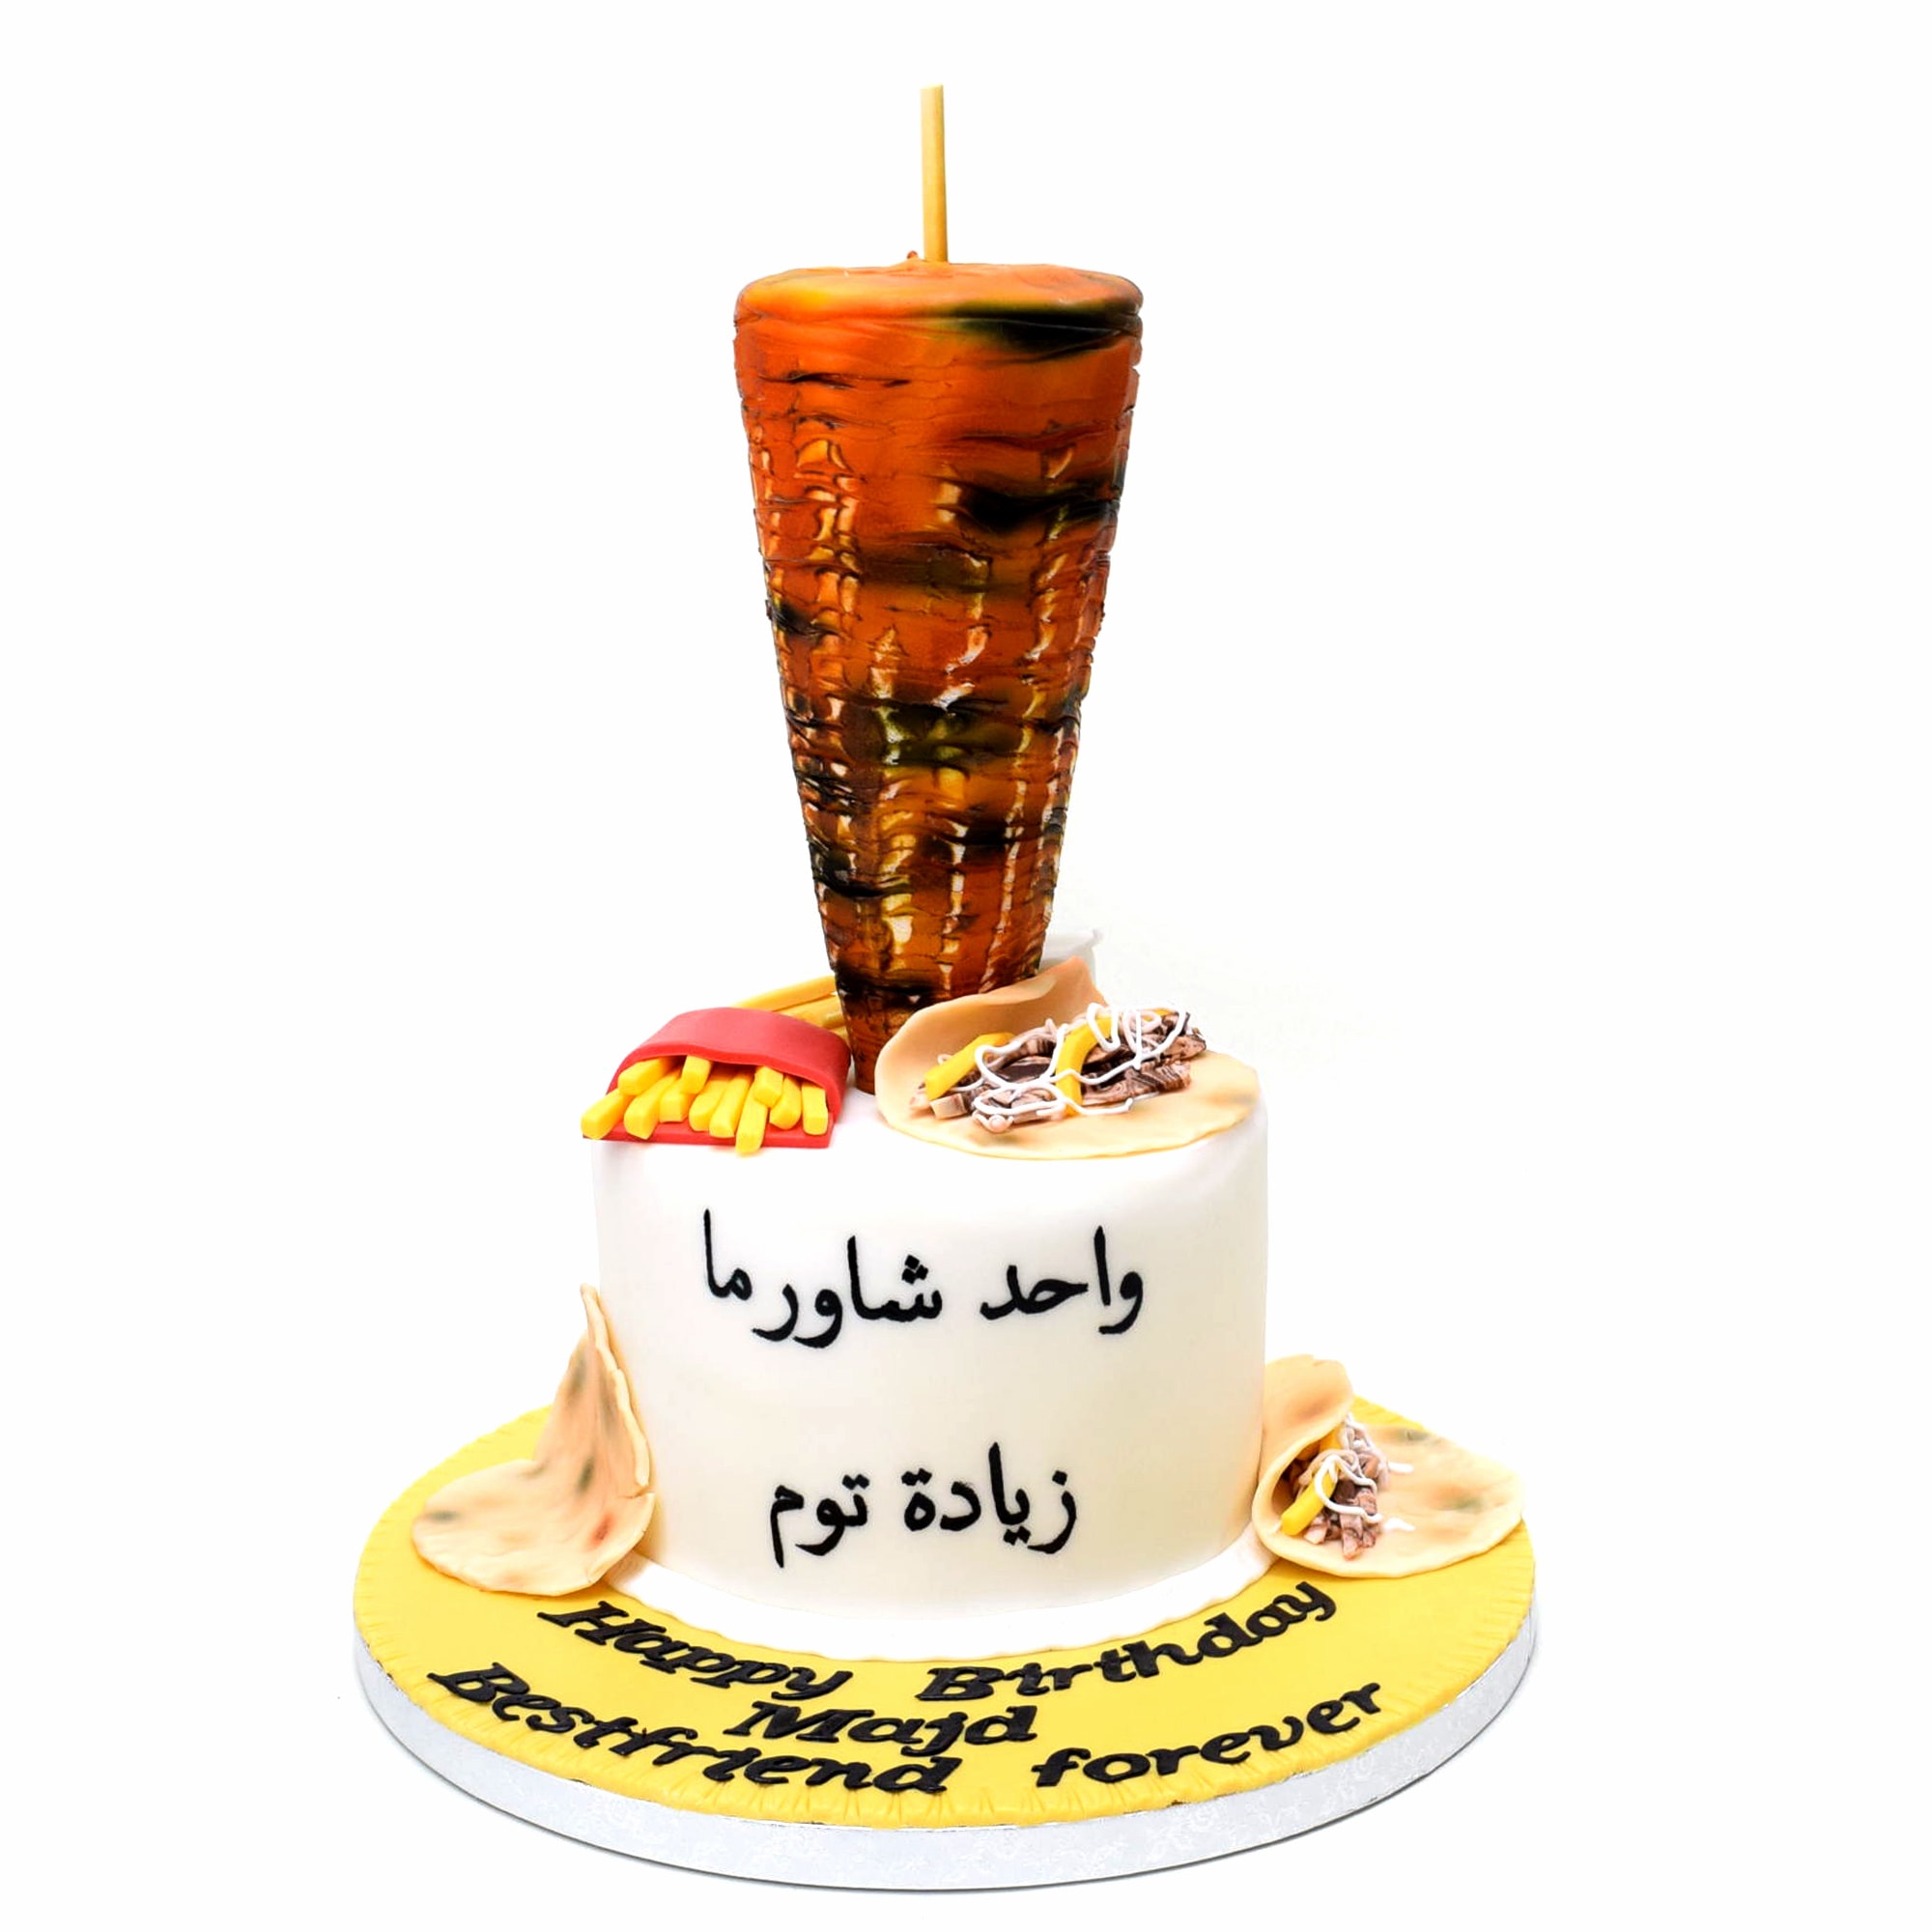 Arabic Coffee and Dates Cake | Date cake, Coffee creamer, Arabic coffee